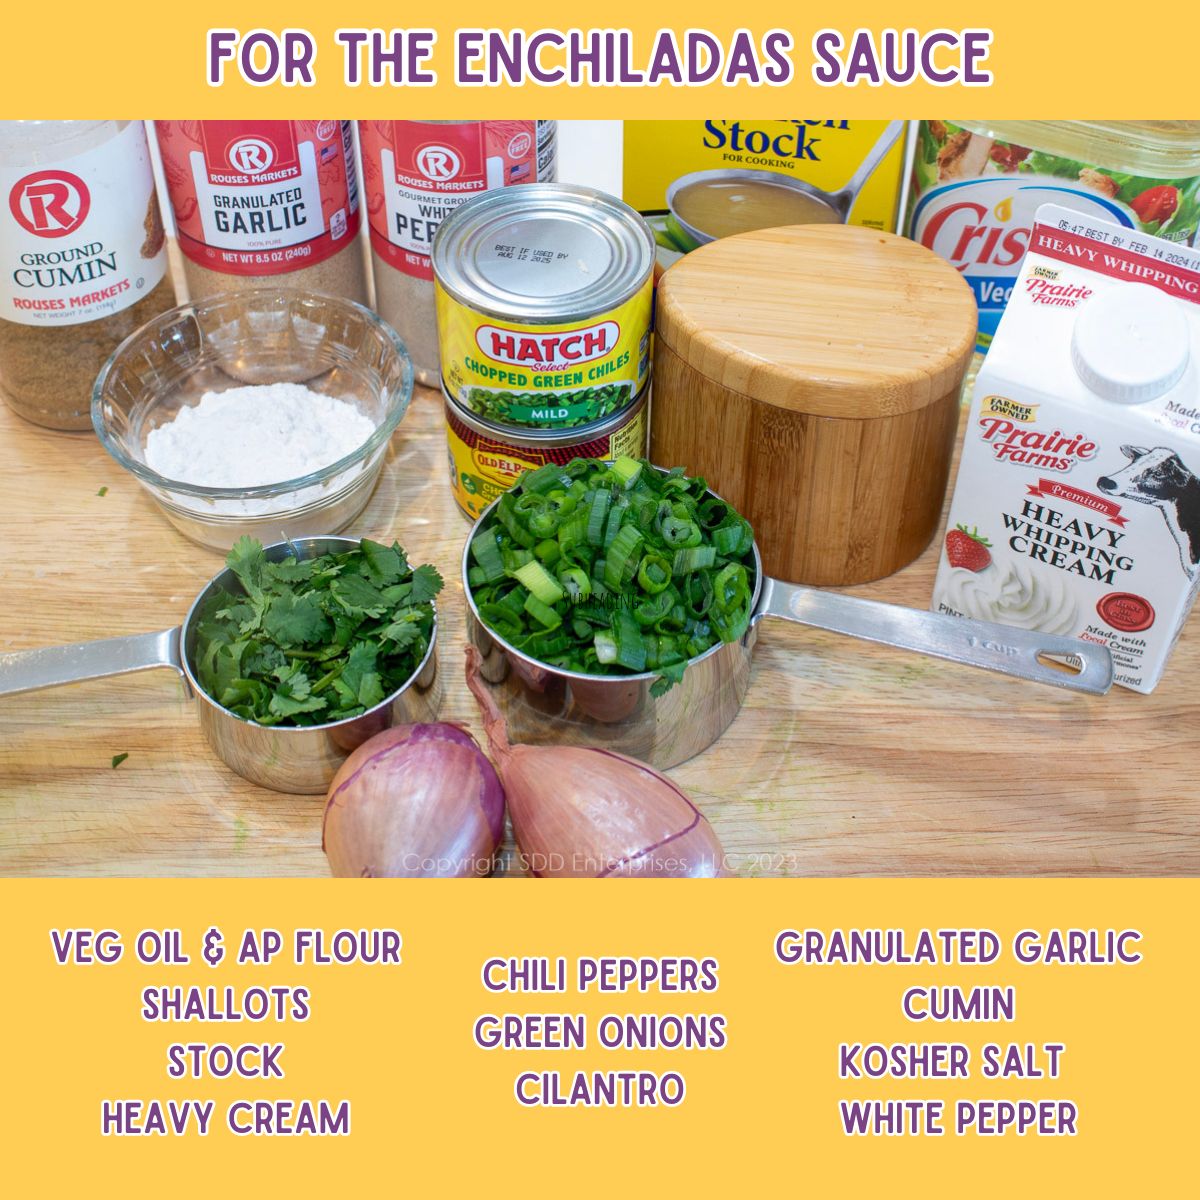 Ingredients for enchiladas sauce.